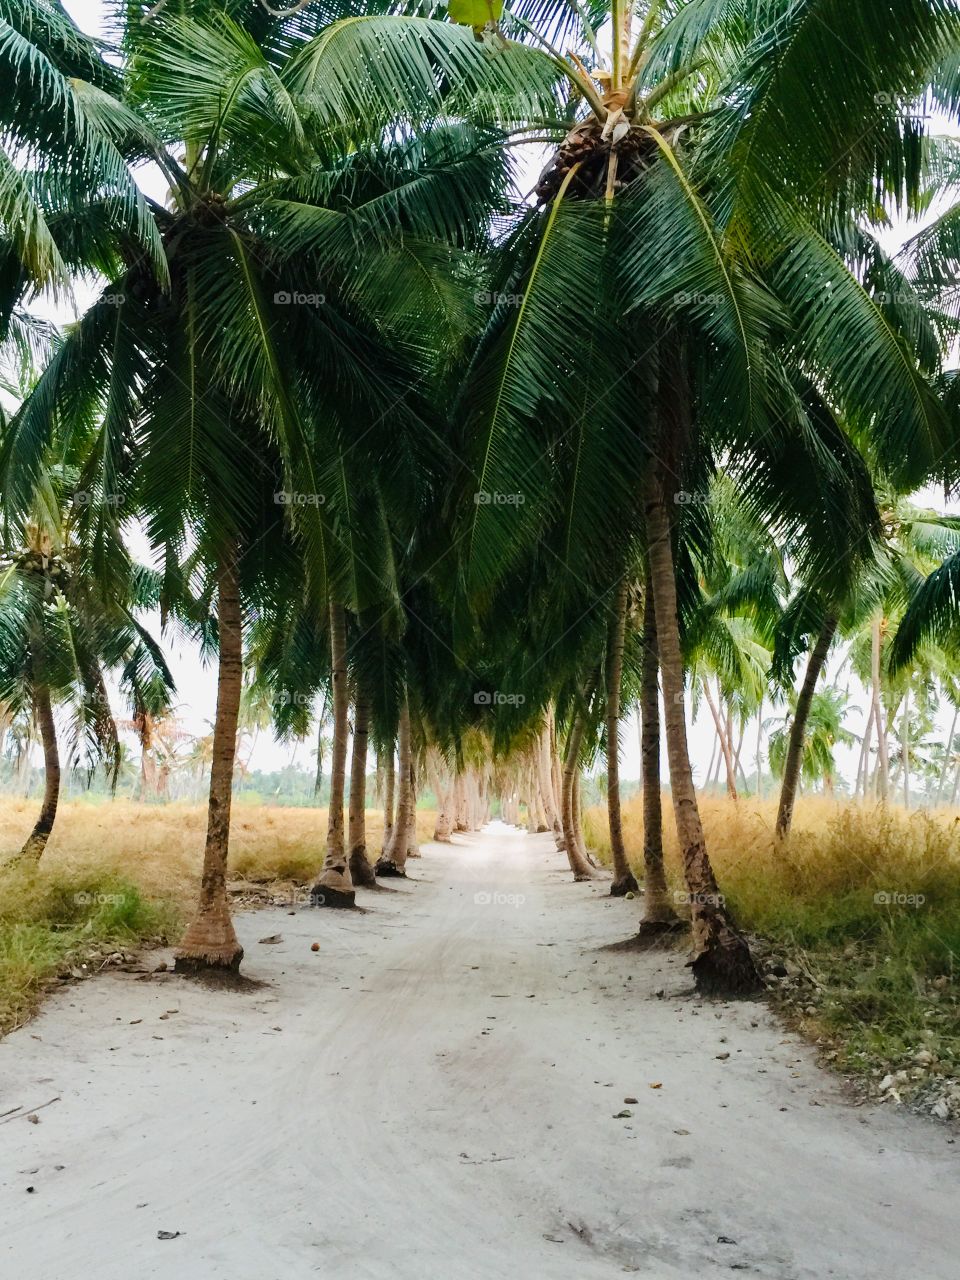 Avenue of palm trees
